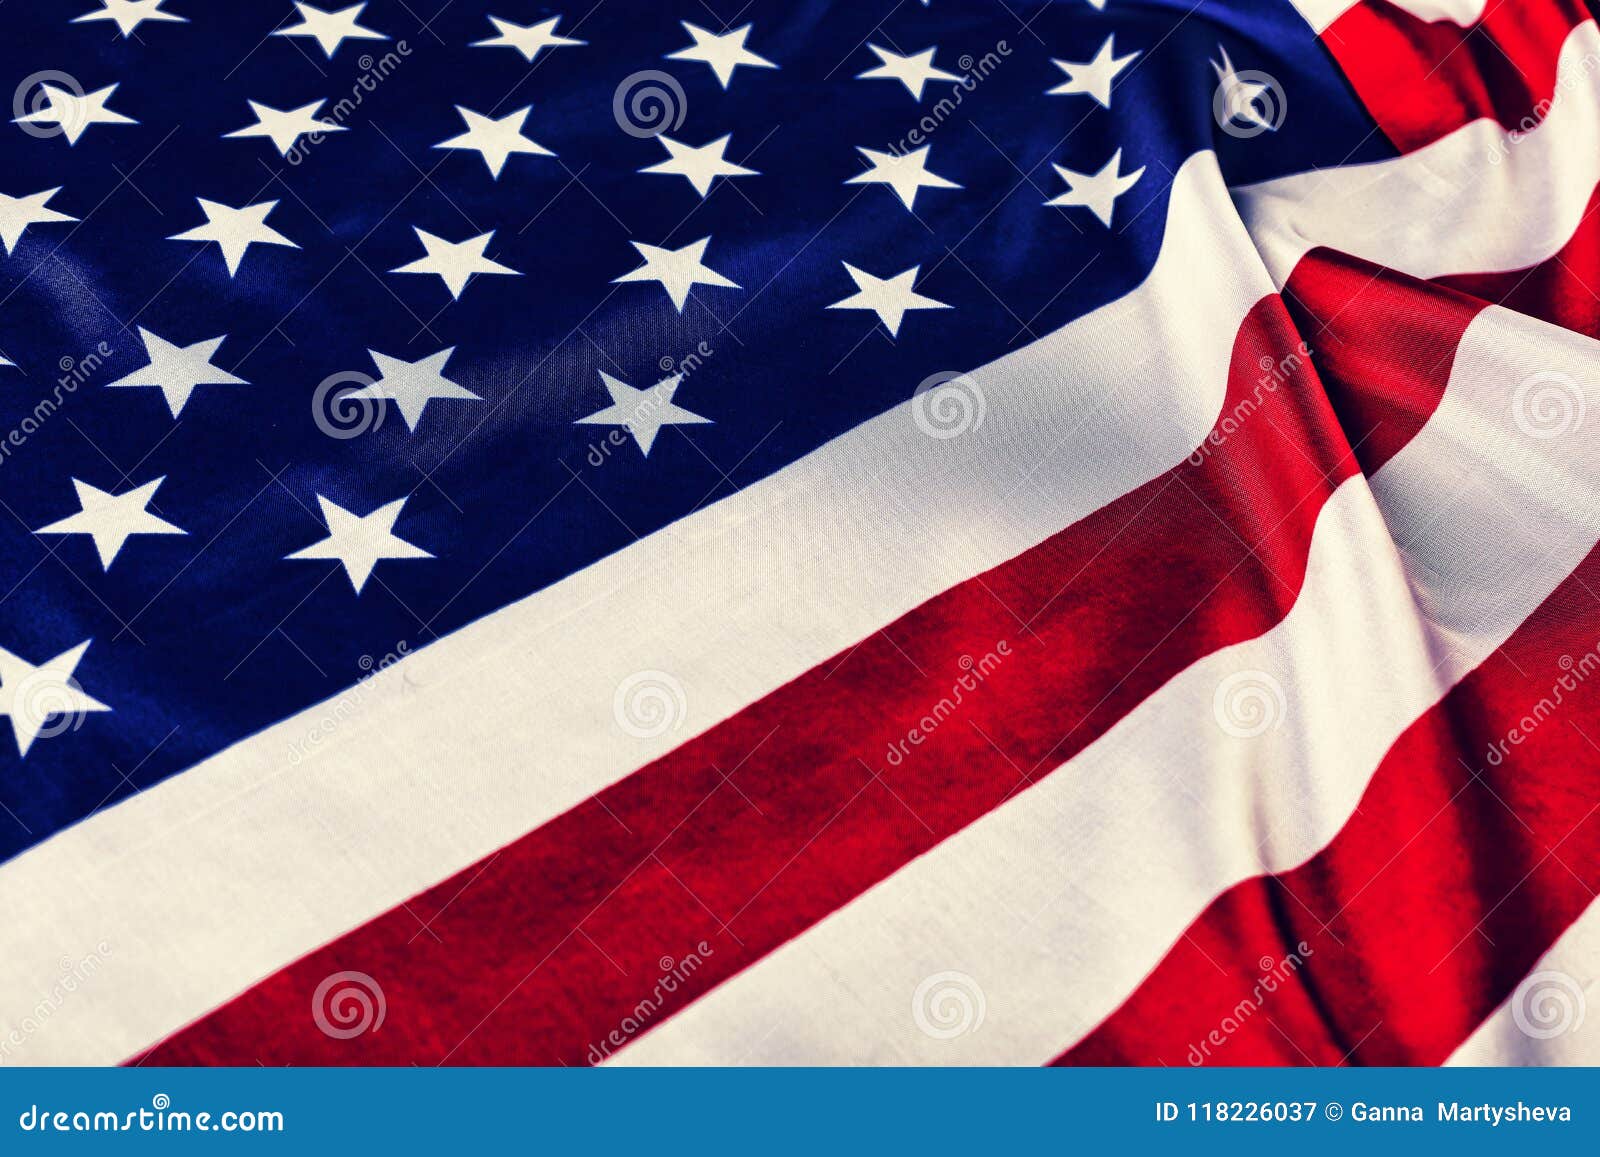 usa, flag, background. close up. concept patriotism, independence day